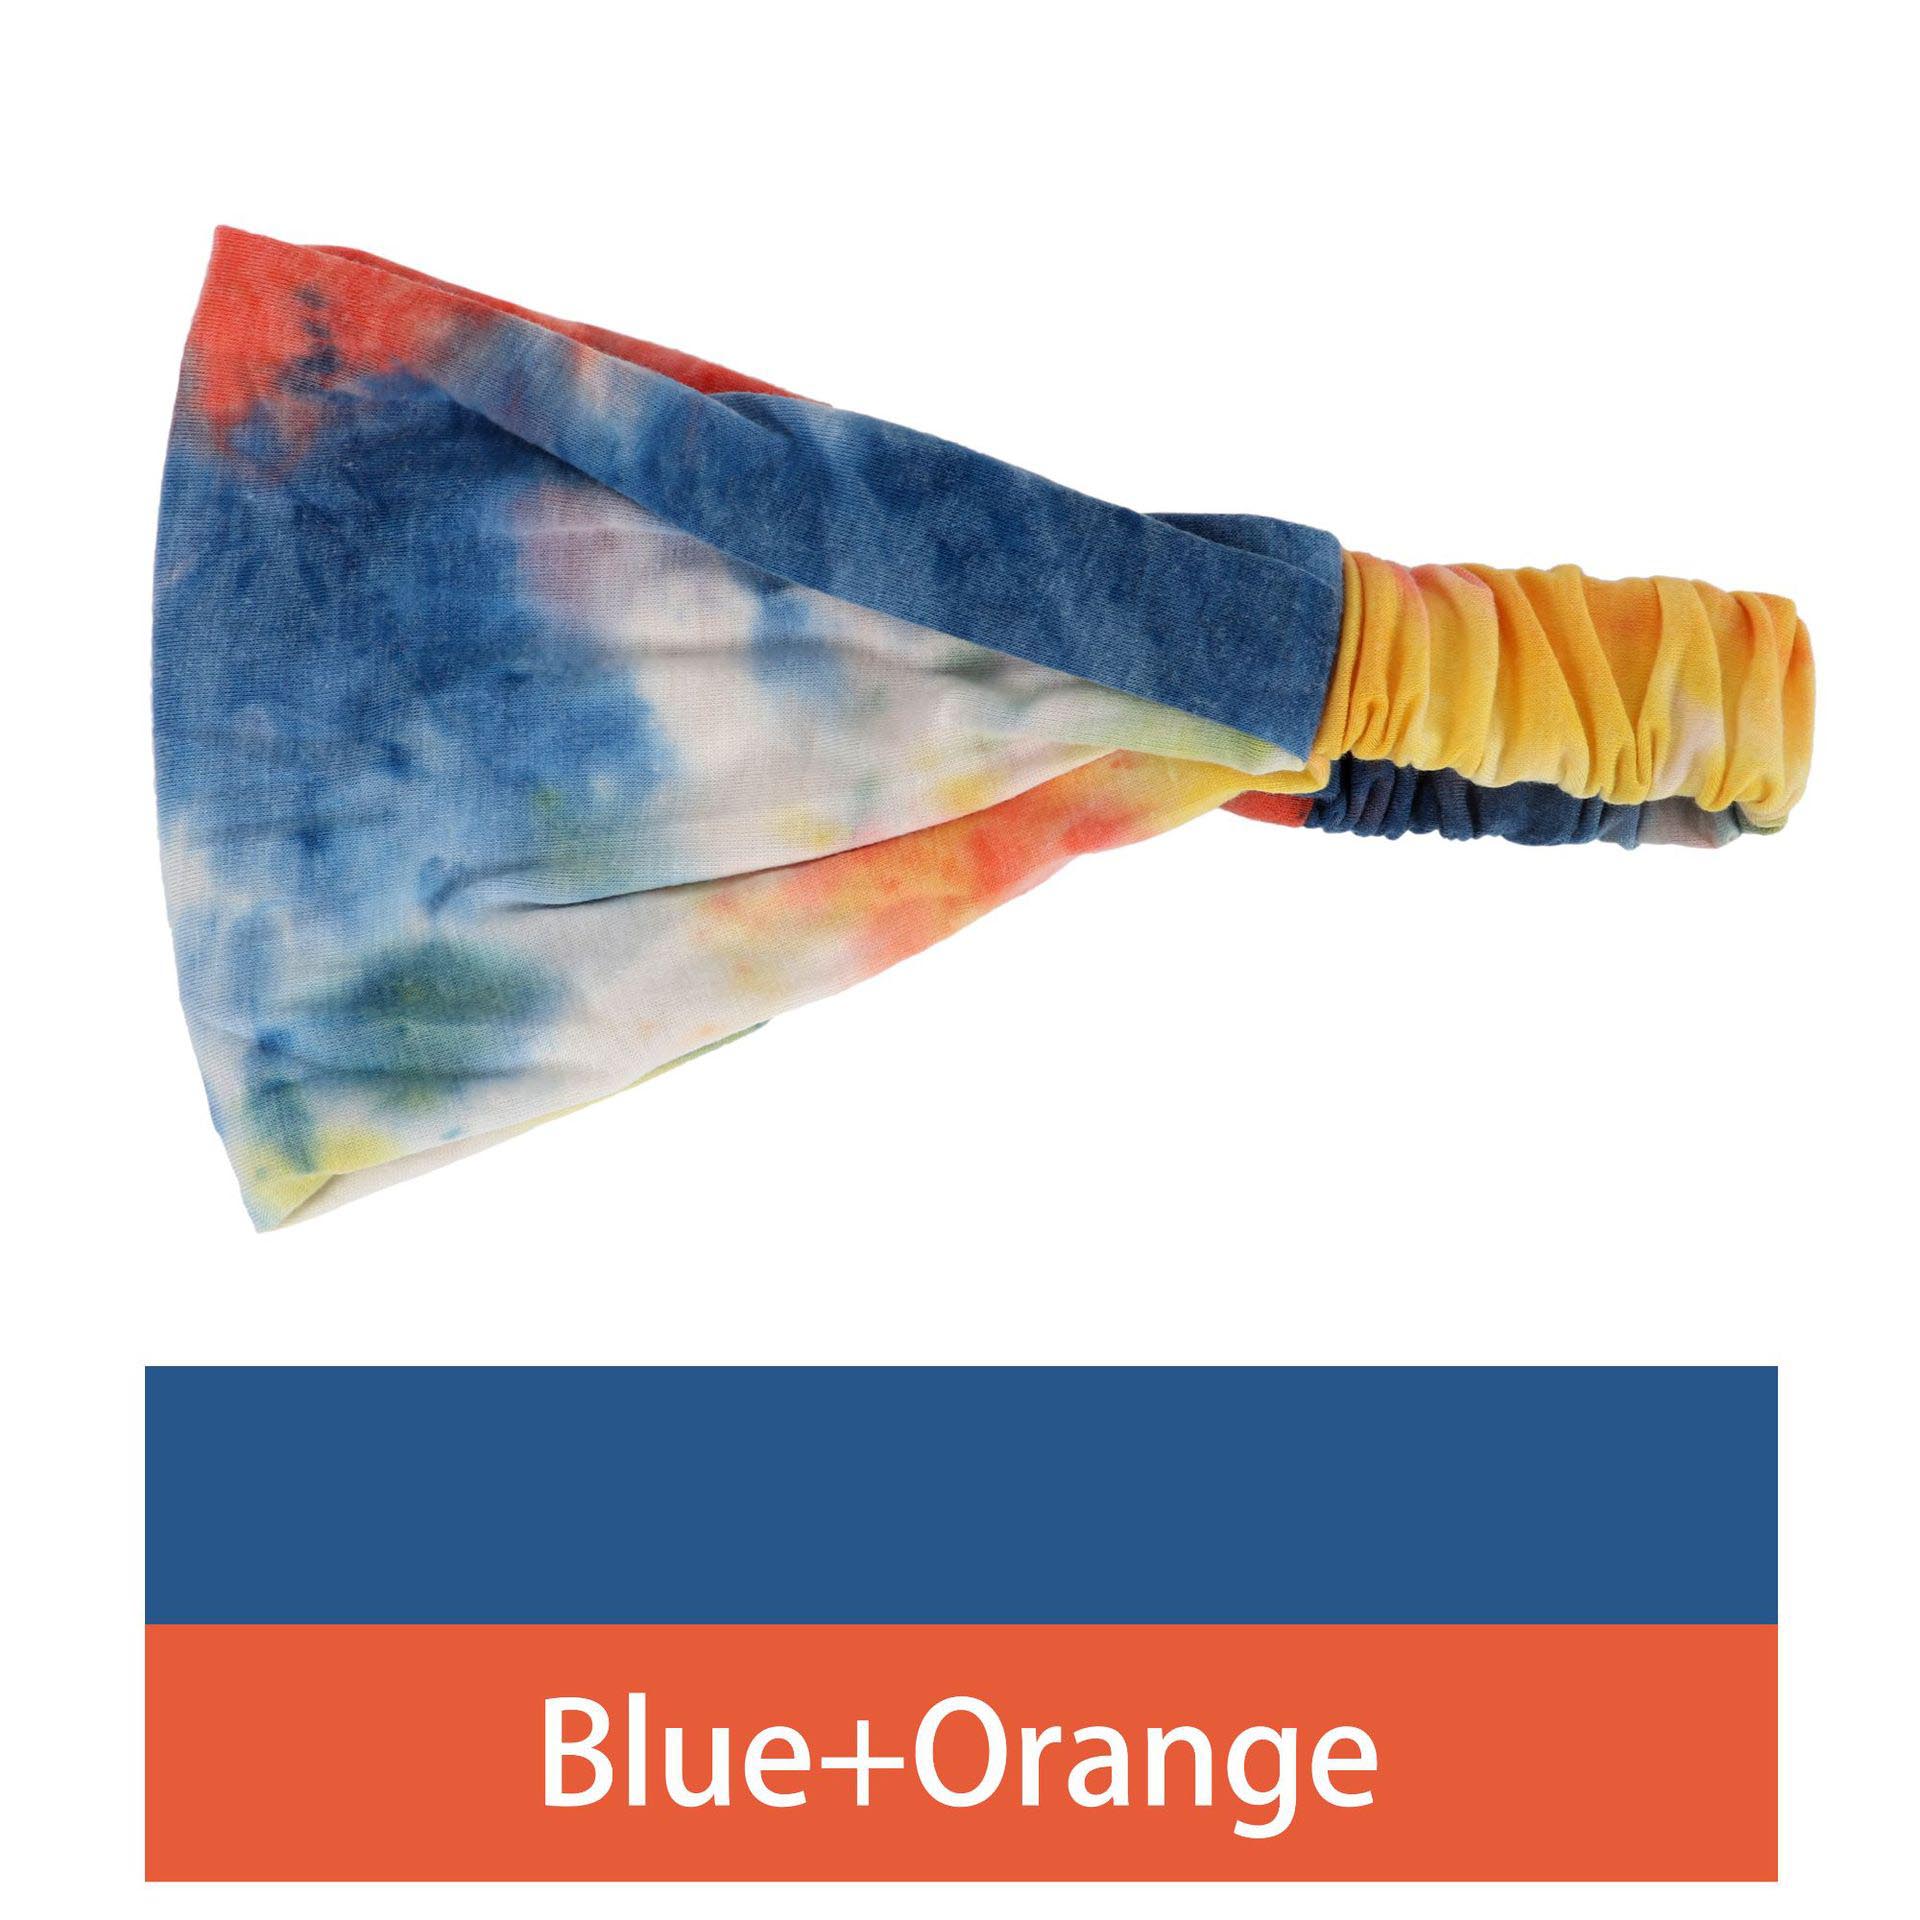 Blue and Orange